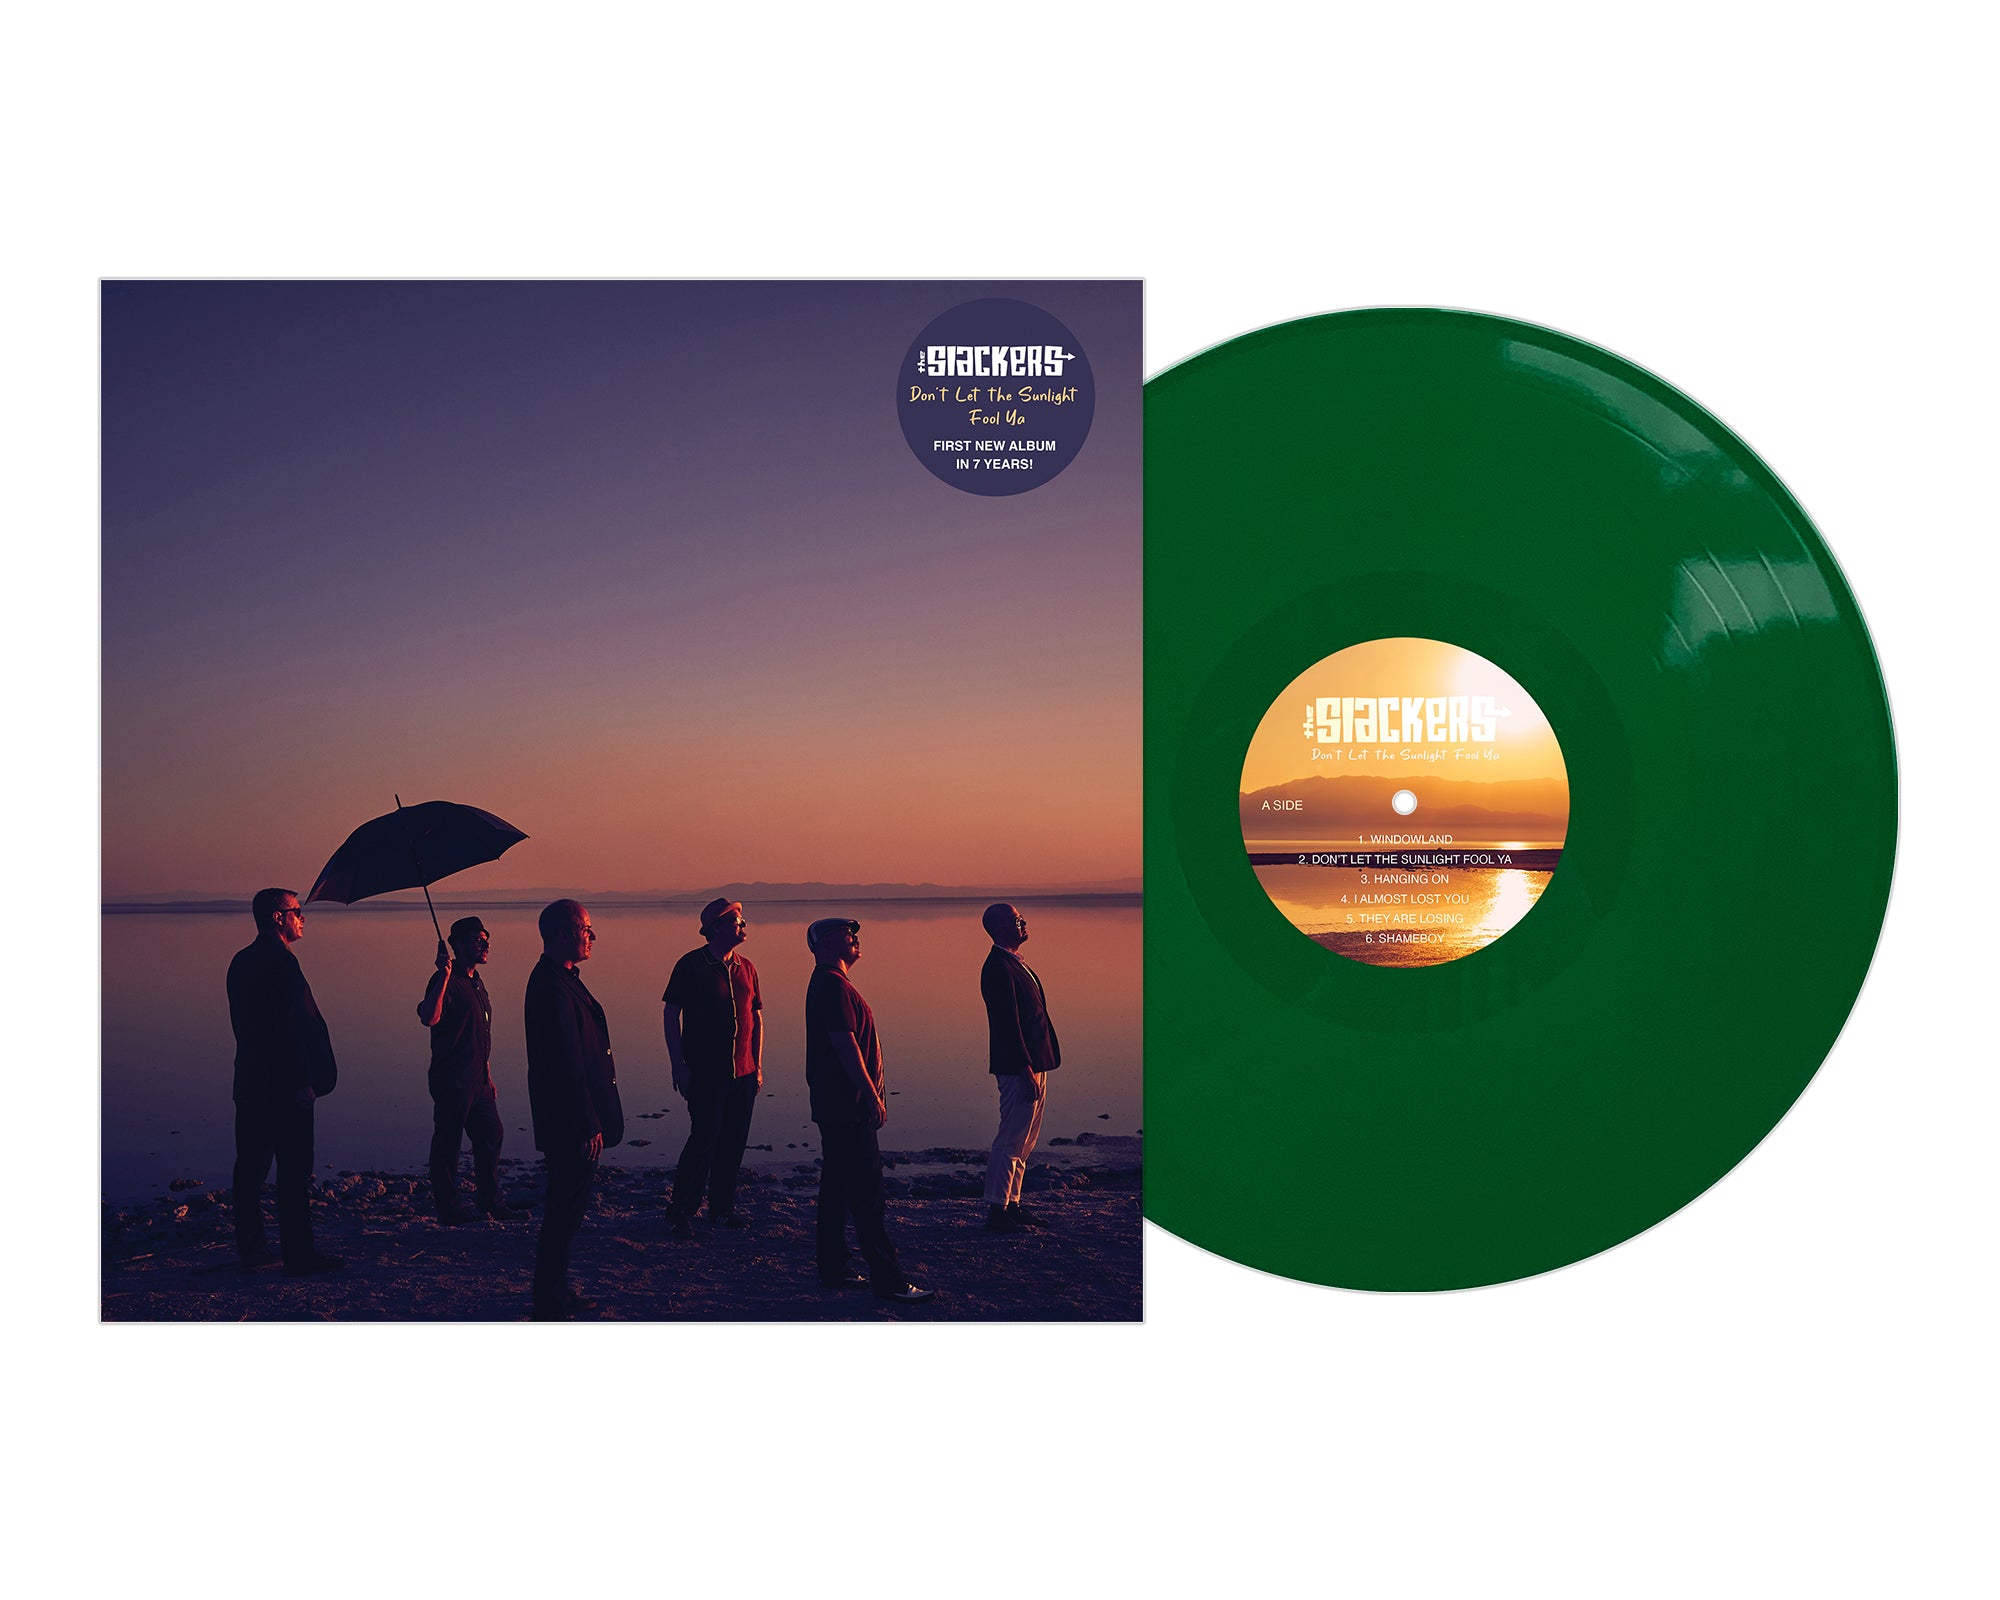 The Slackers - Don't Let The Sunlight Fool Ya Green Vinyl LP